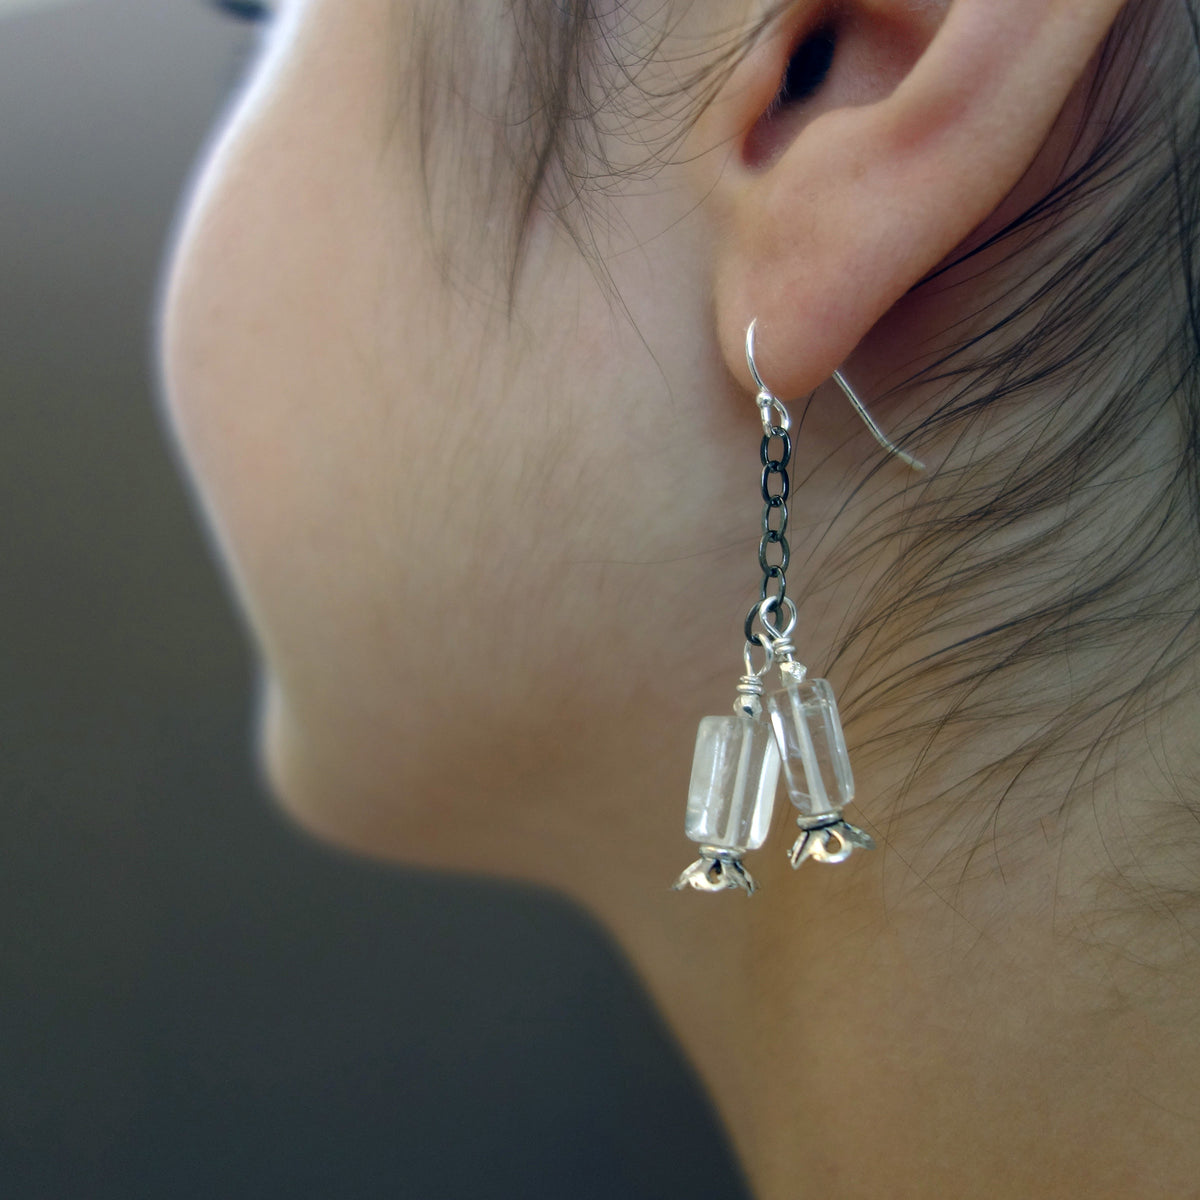 Rock On Crystal Girl earrings